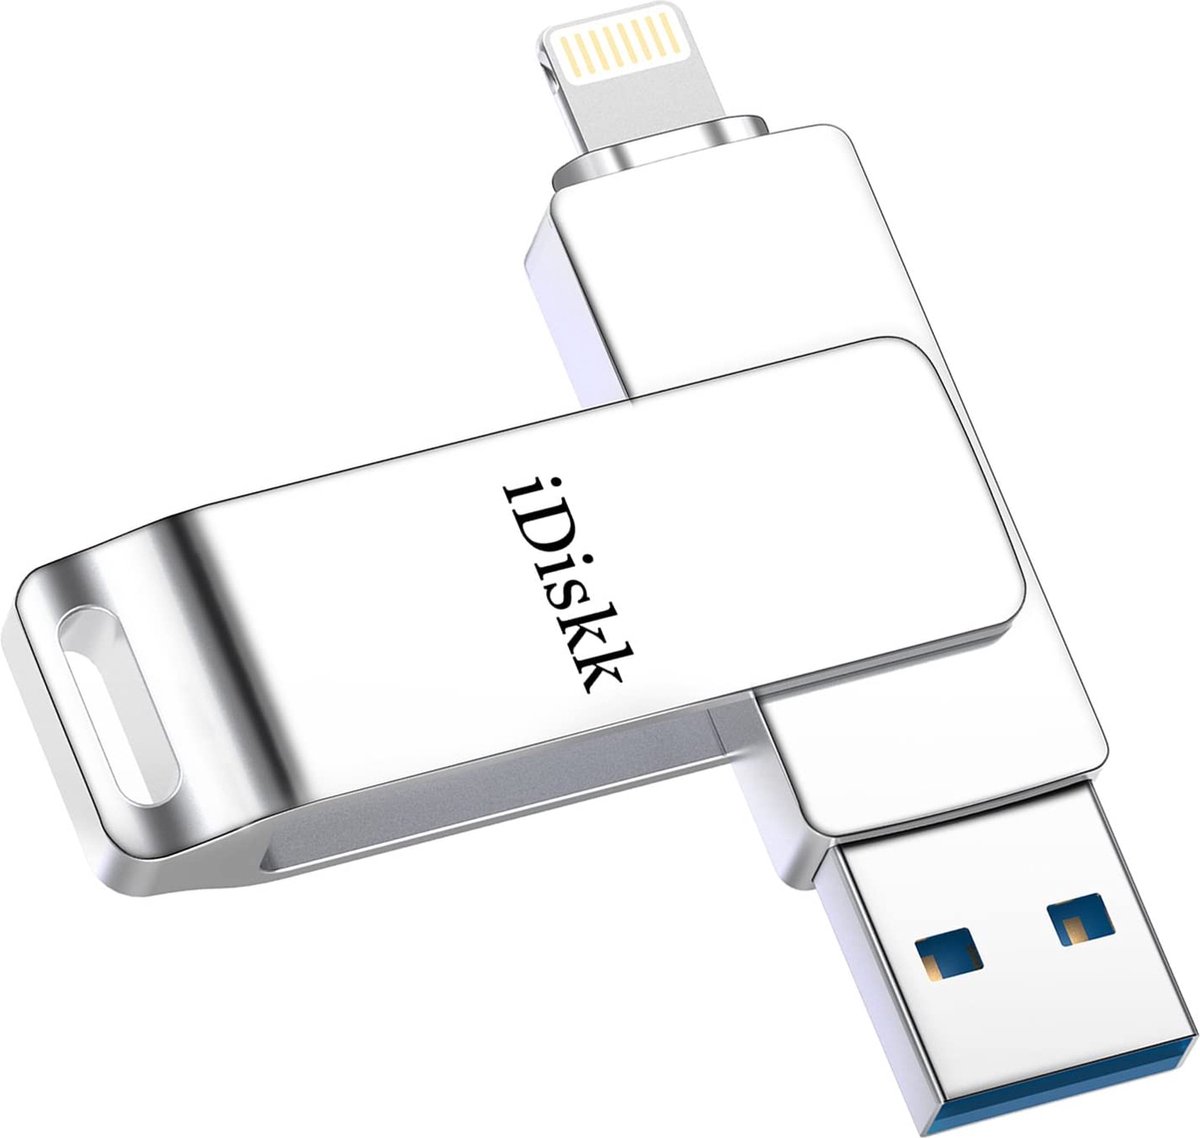 Clé stockage mémoire iDiskk 64 Go iPhone iOS et ordinateurs USB